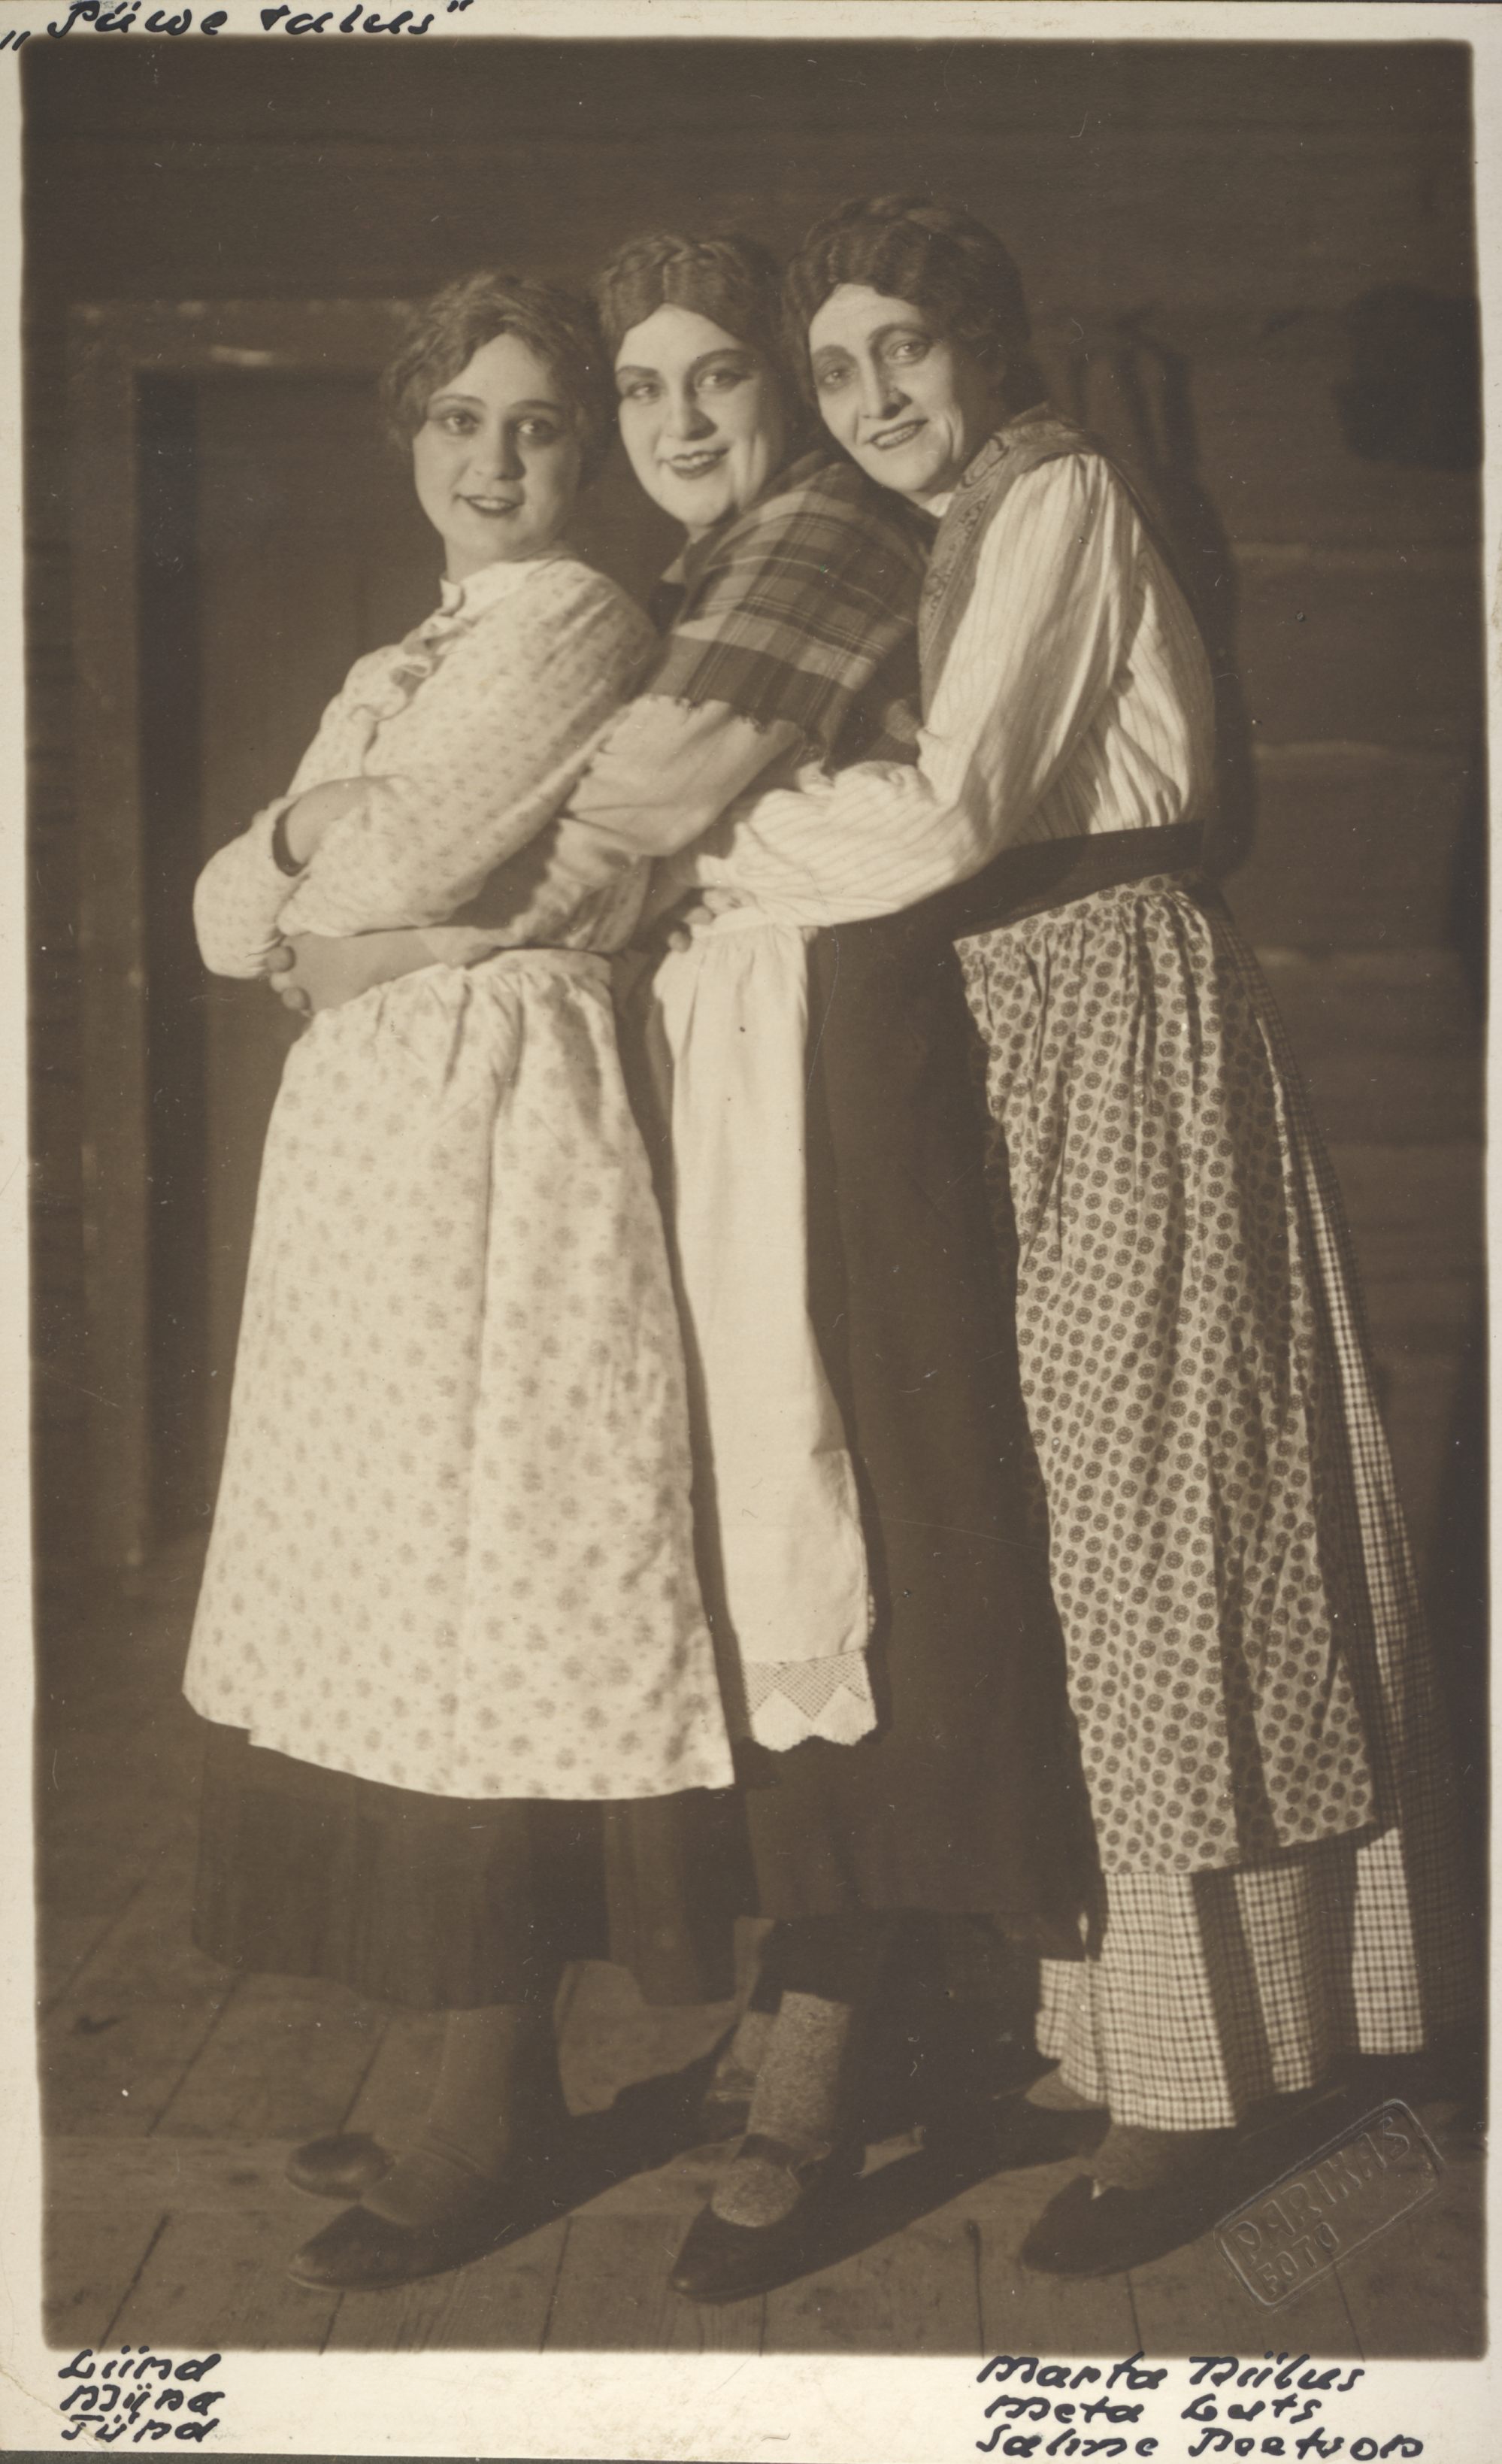 A. Kitzberg's "Püve Farm" in "Estonia" in 1926. March Niles, Meta Luts and Salme Peetson